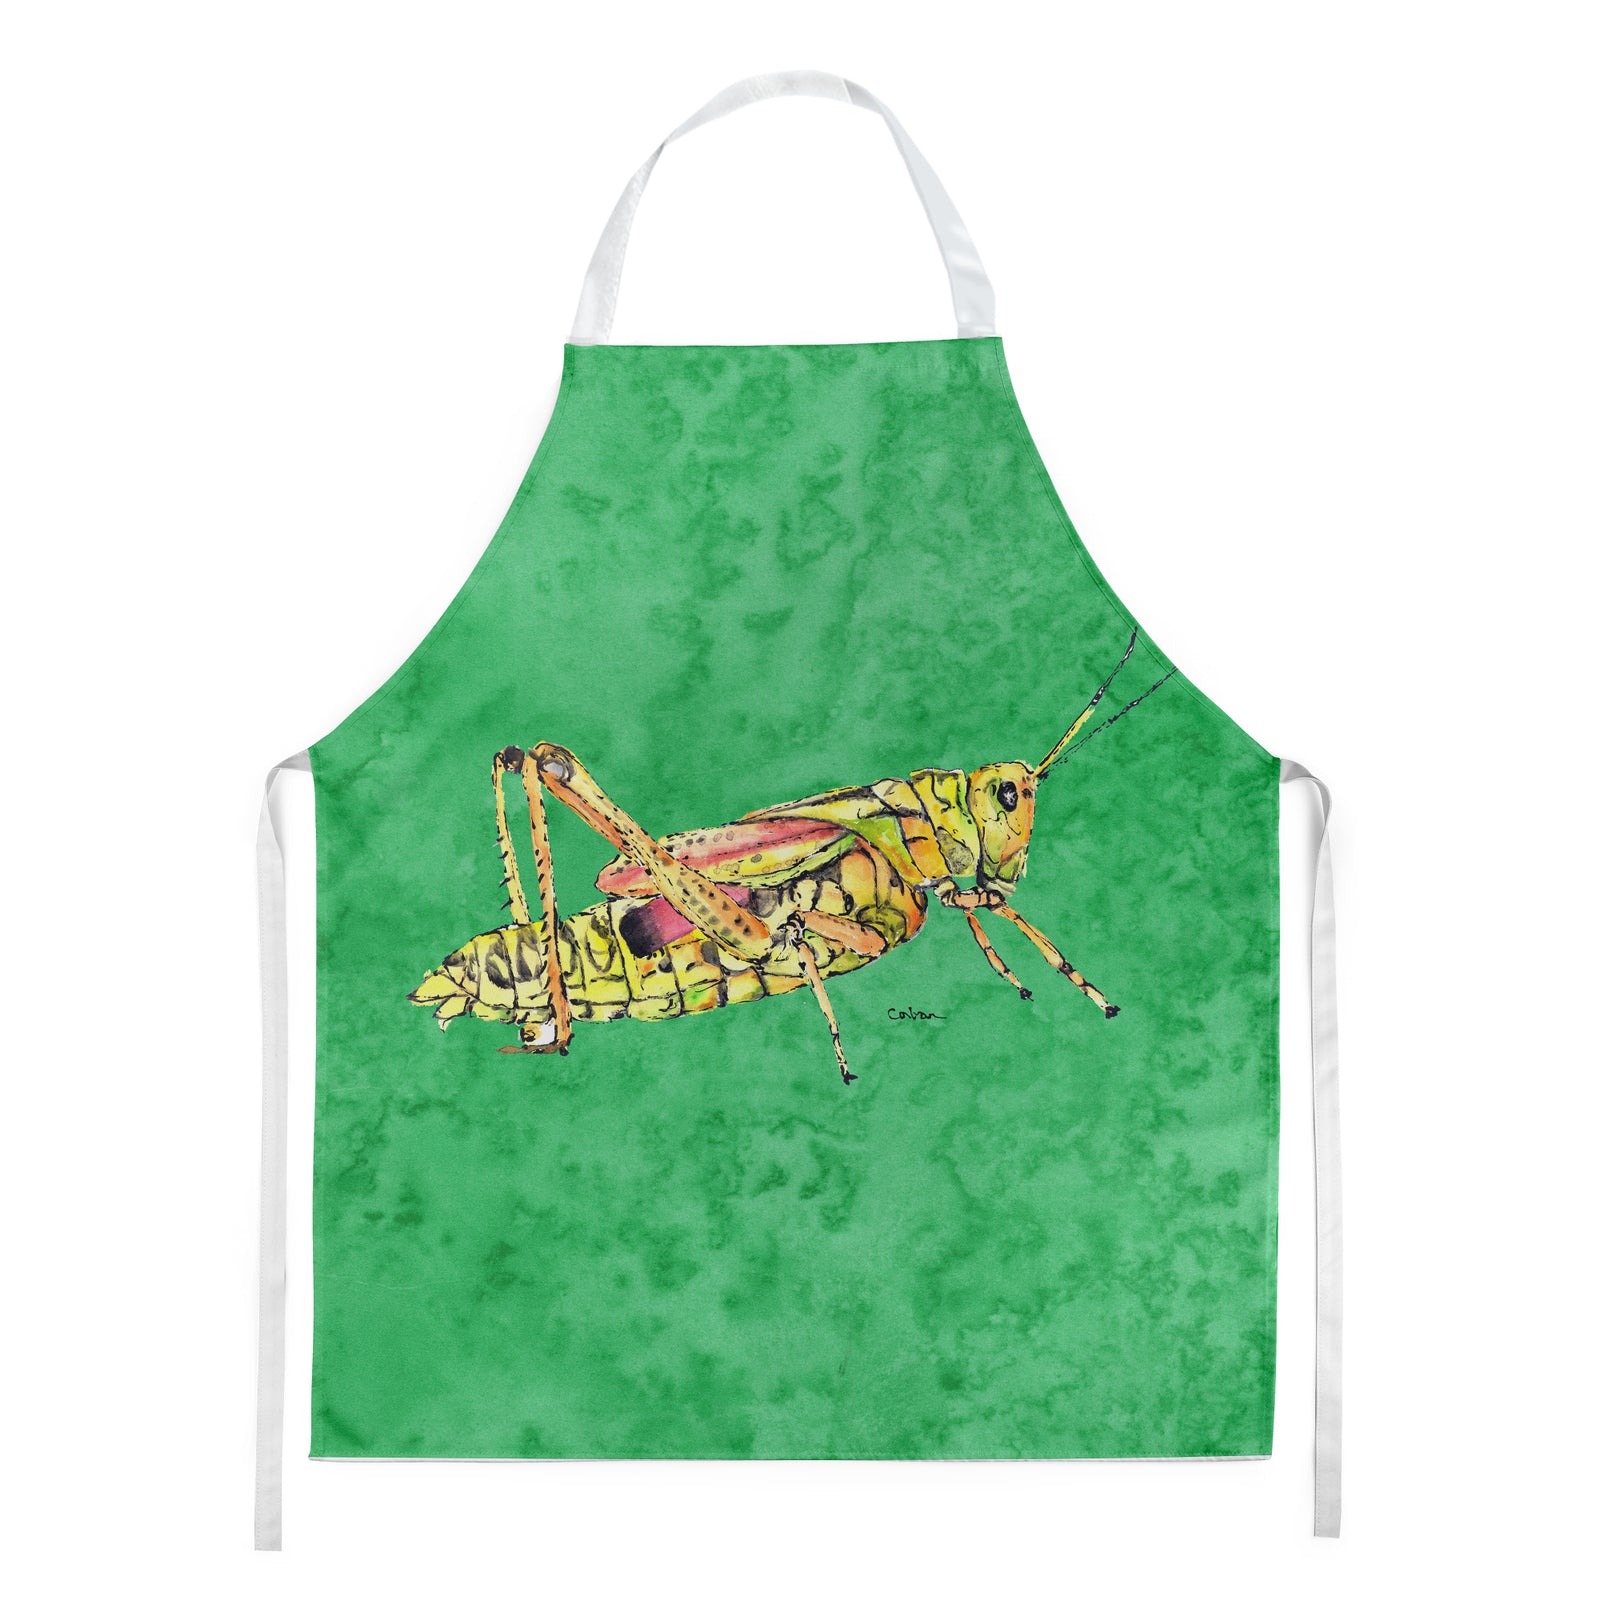 Grasshopper on Green Apron